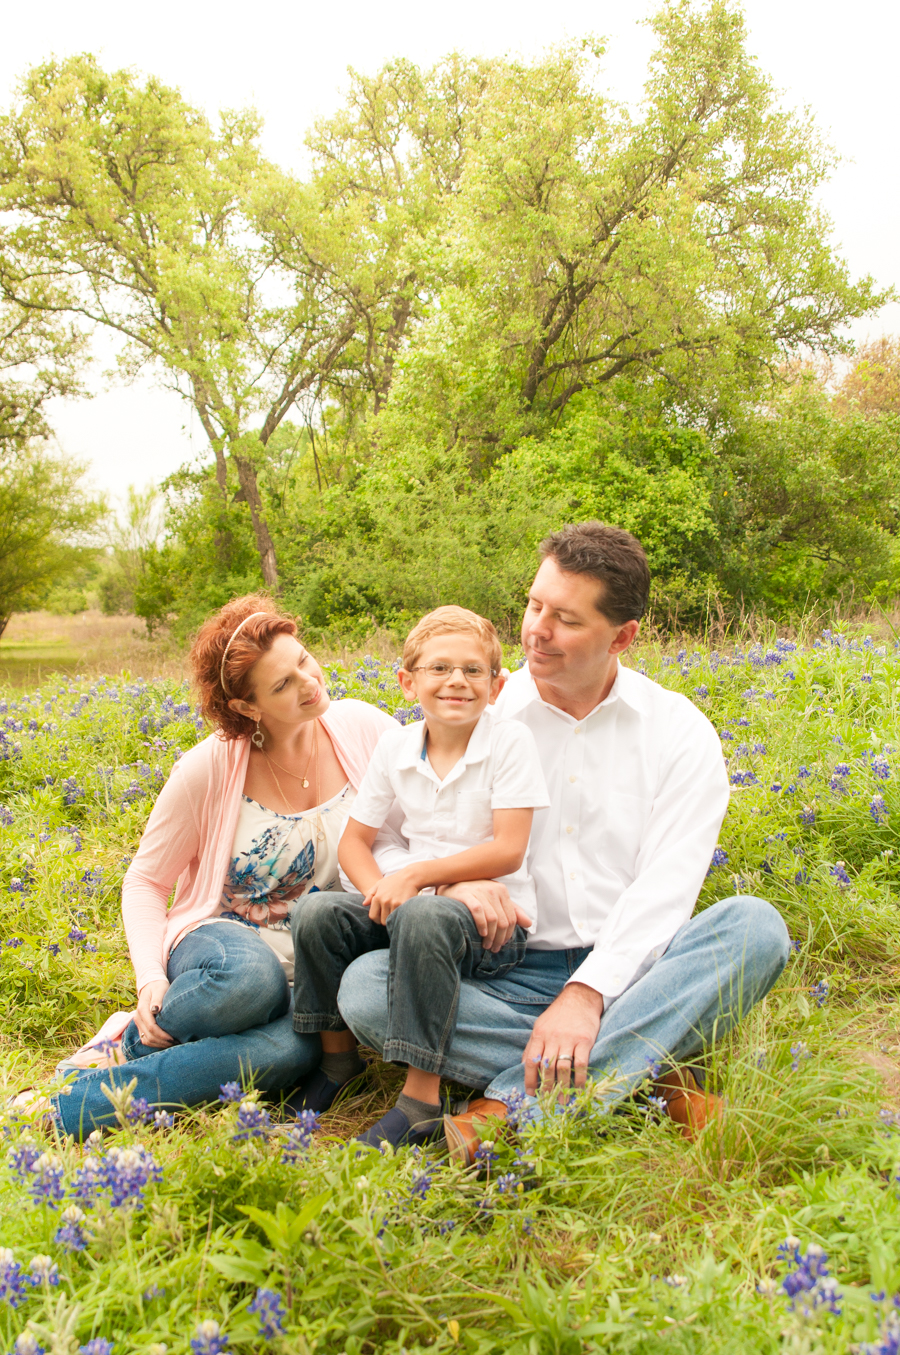 Texas Family Portrait Session in Bluebonnets